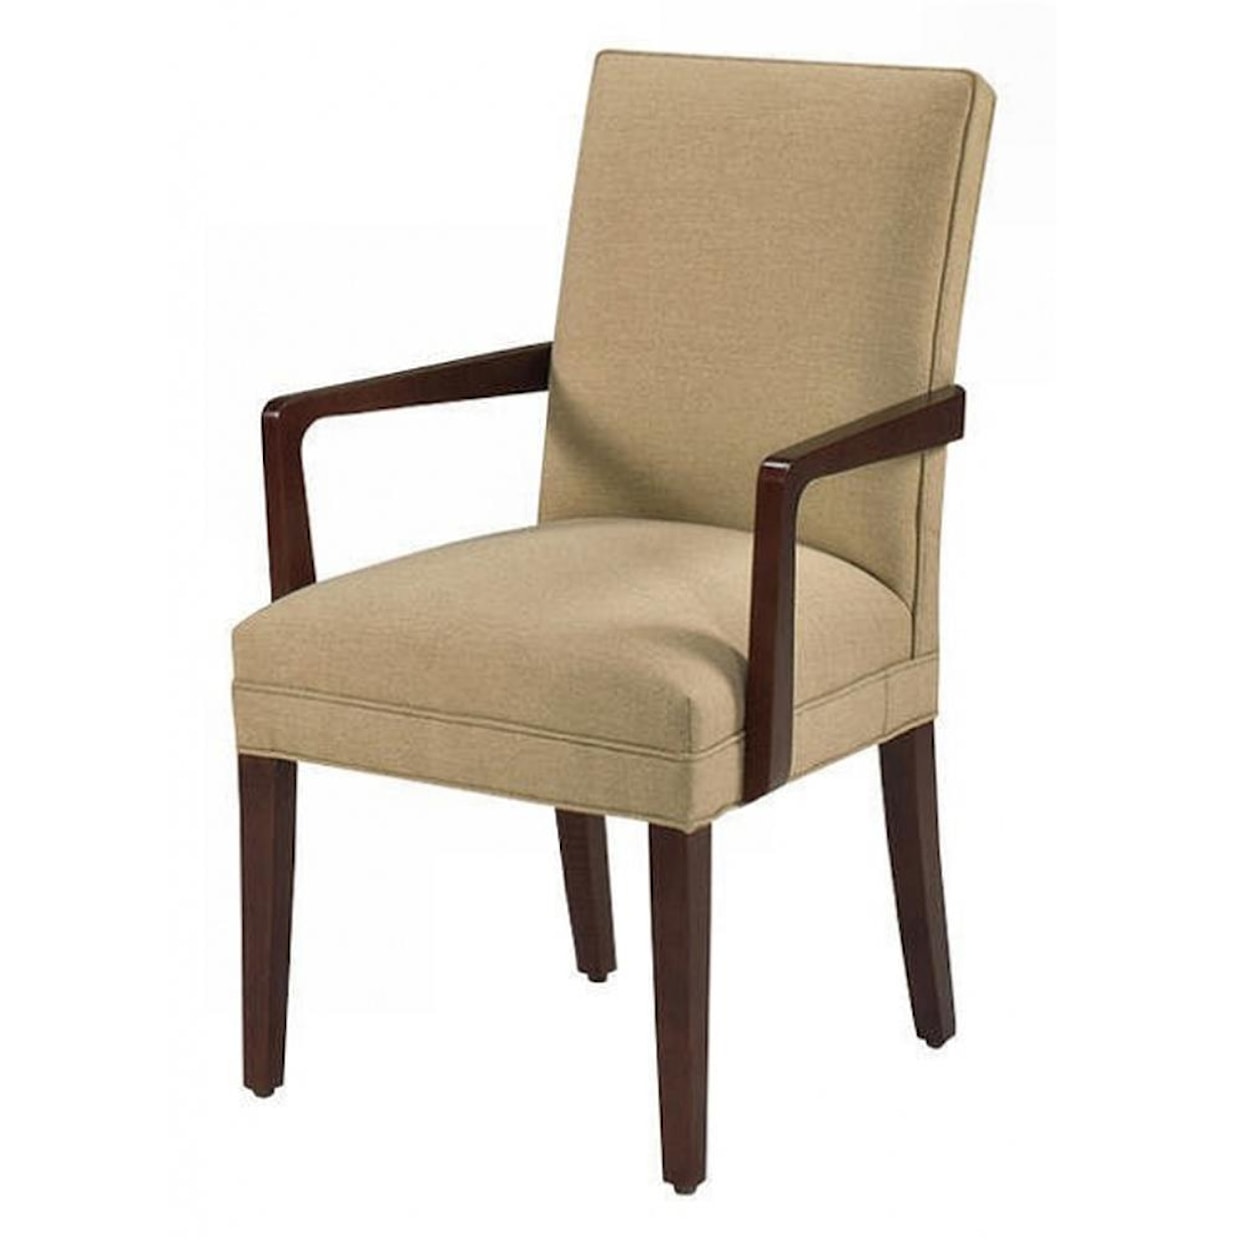 Designmaster Chairs  Chicago Arm Chair